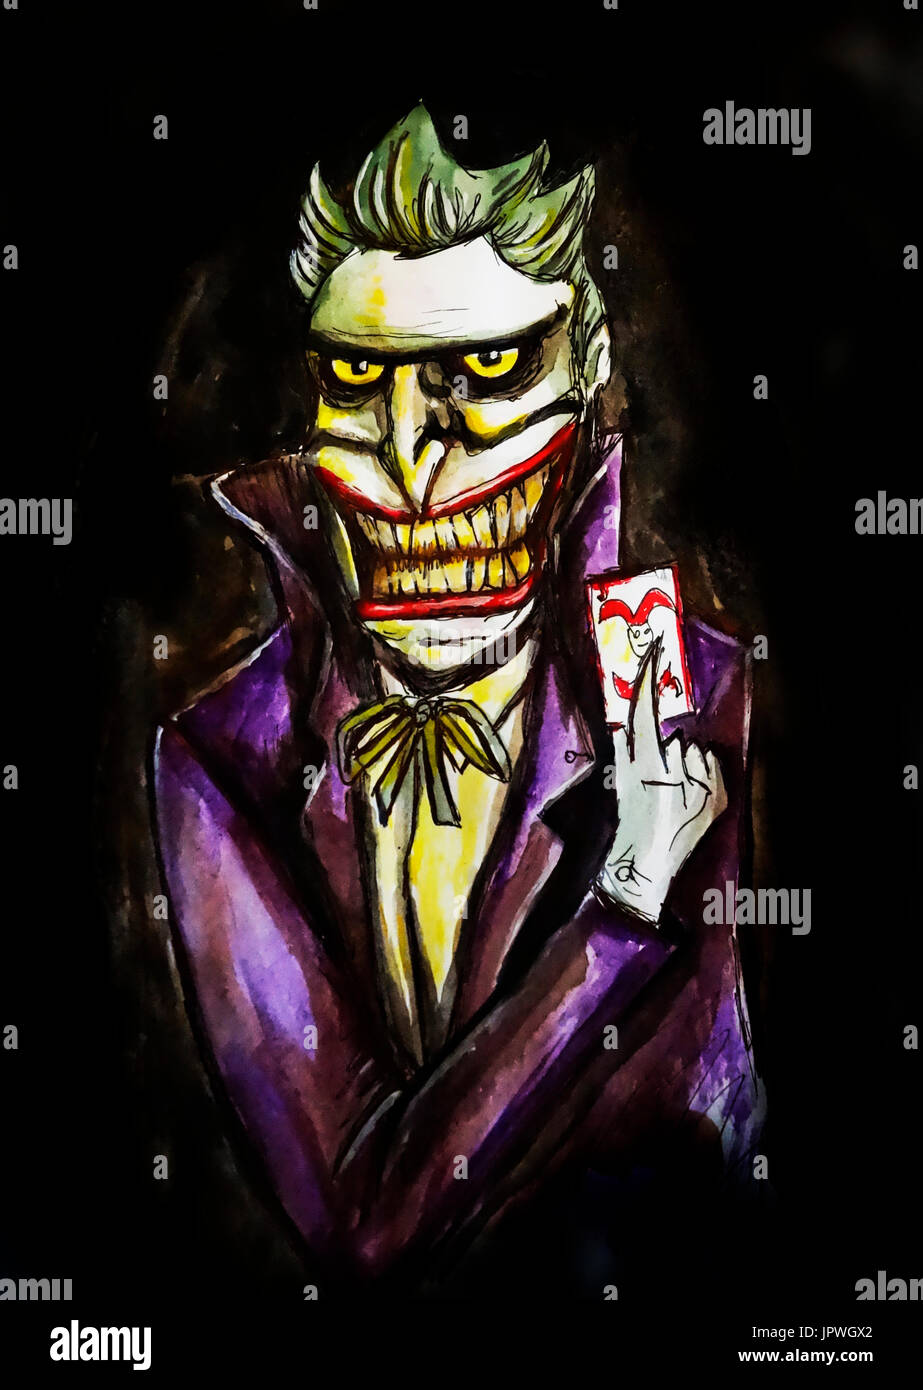 Illustration of 'the Joker' a villain from the Batman comics Stock Photo